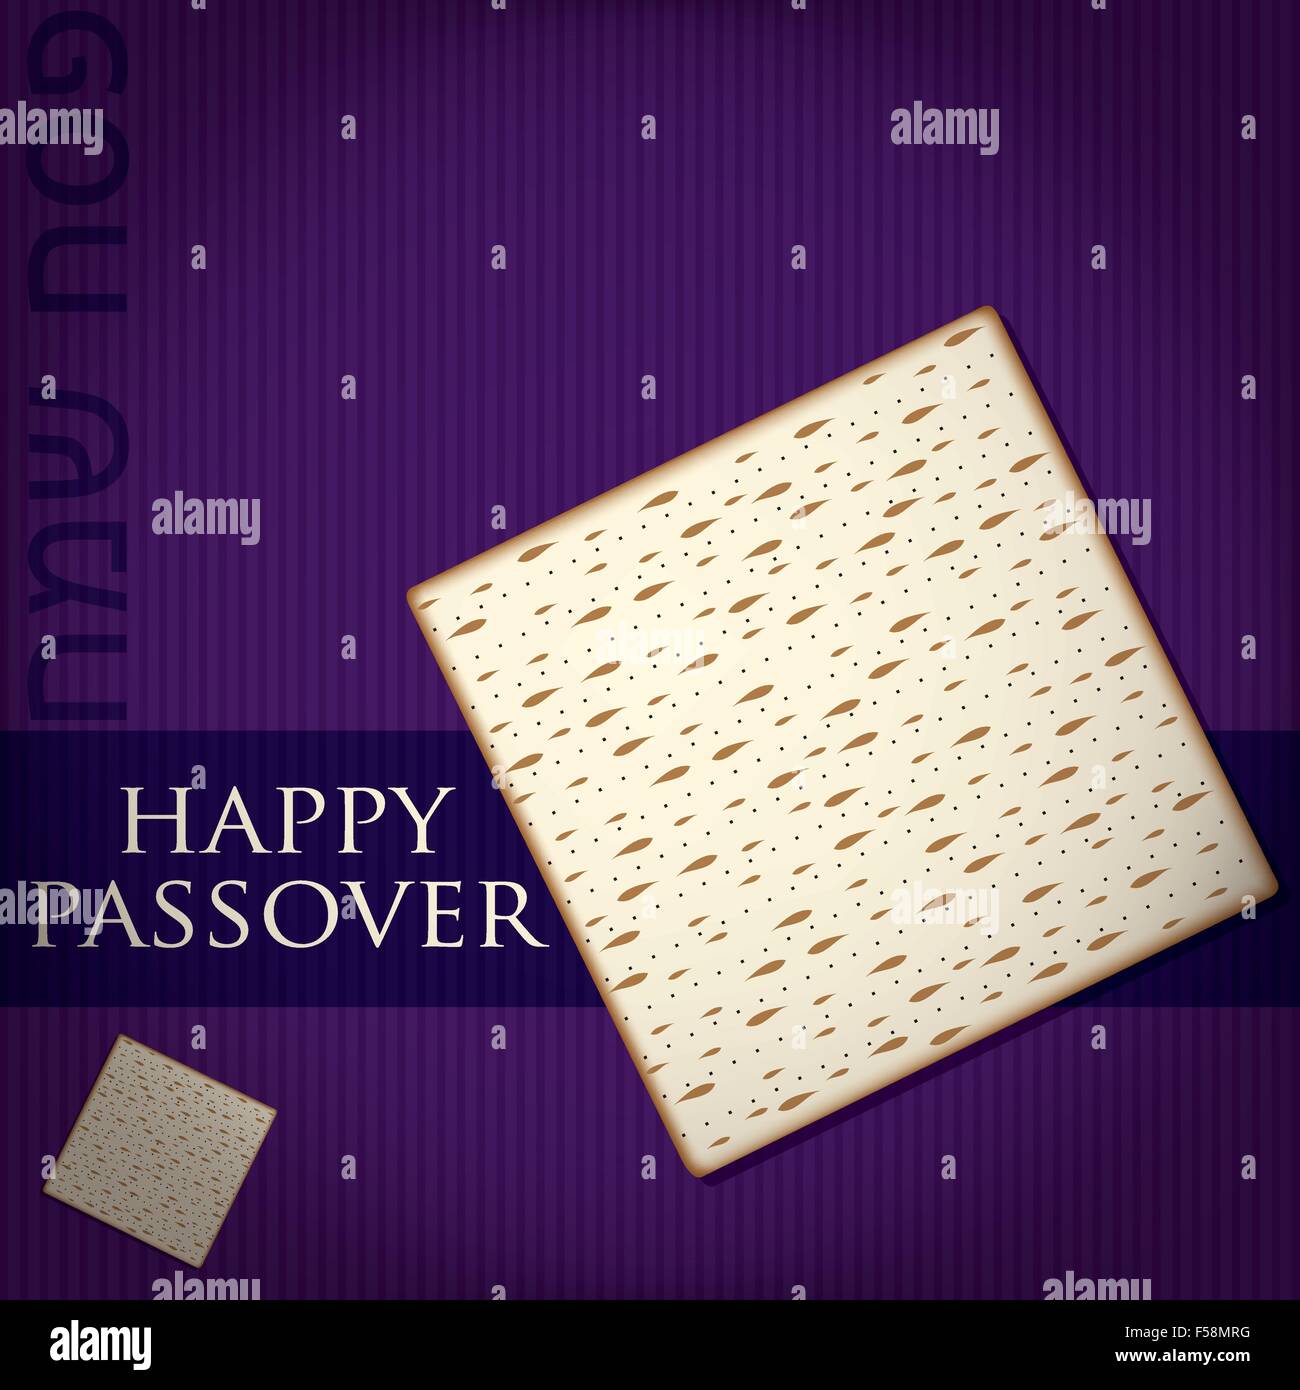 Happy Passover card in vector format. Stock Vector